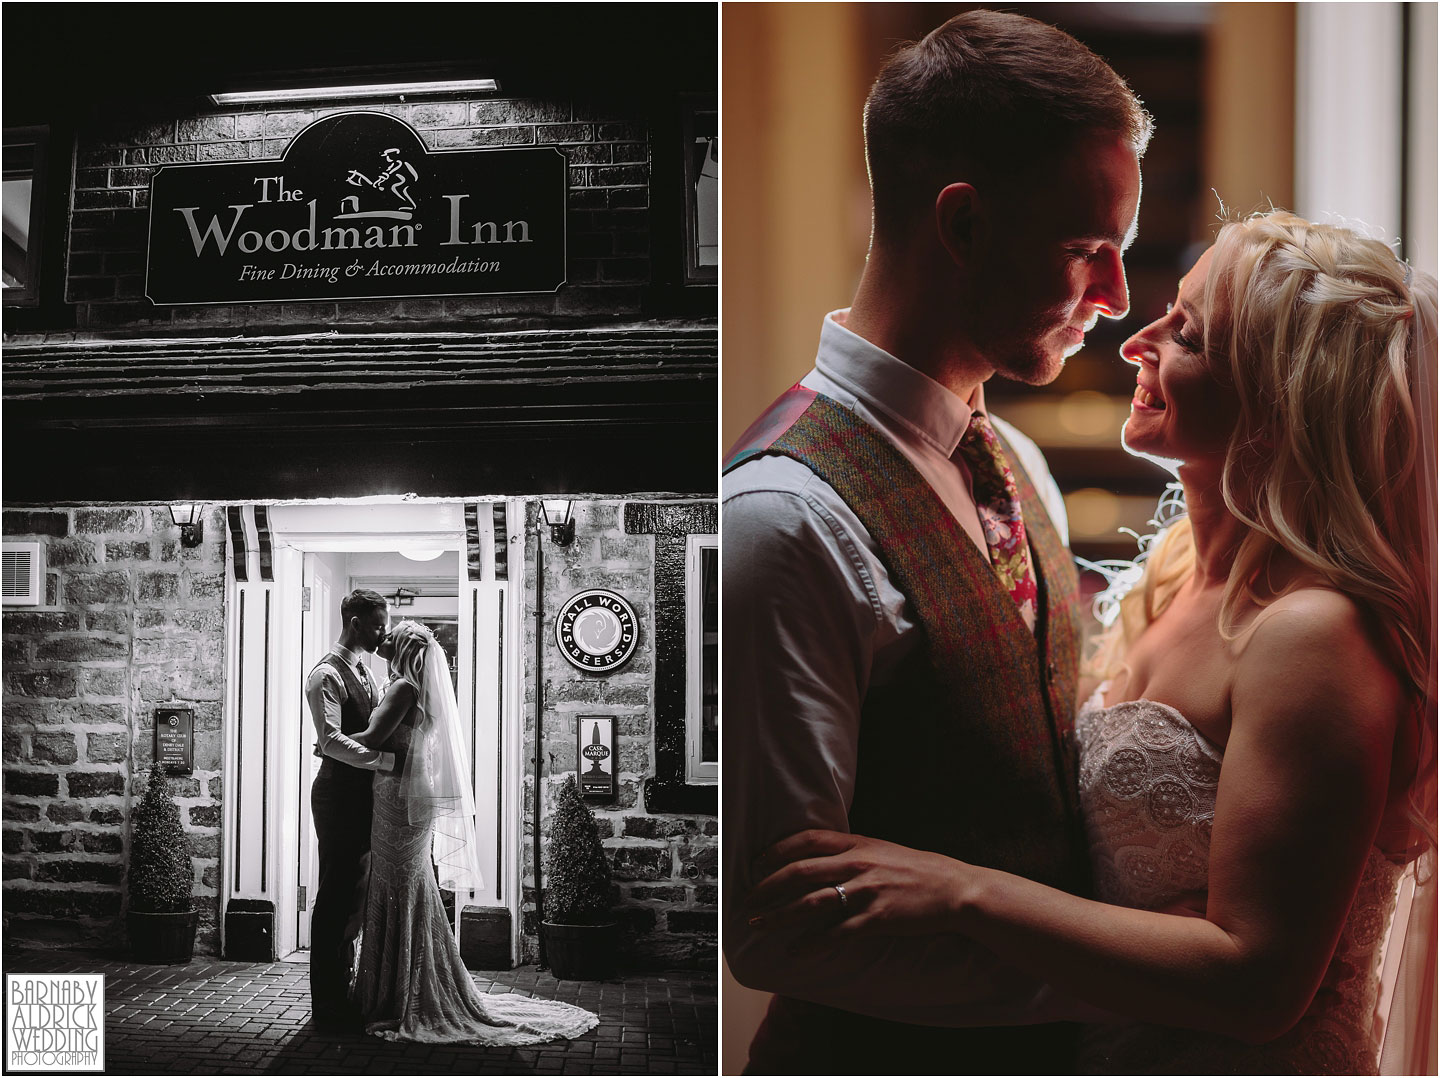 The Woodman Inn Thunderbridge Wedding Photography, Huddersfield Wedding Photographer, Barnaby Aldrick Wedding Photography, Yorkshire Wedding Photographer, The Woodman Inn Kirkburton Wedding